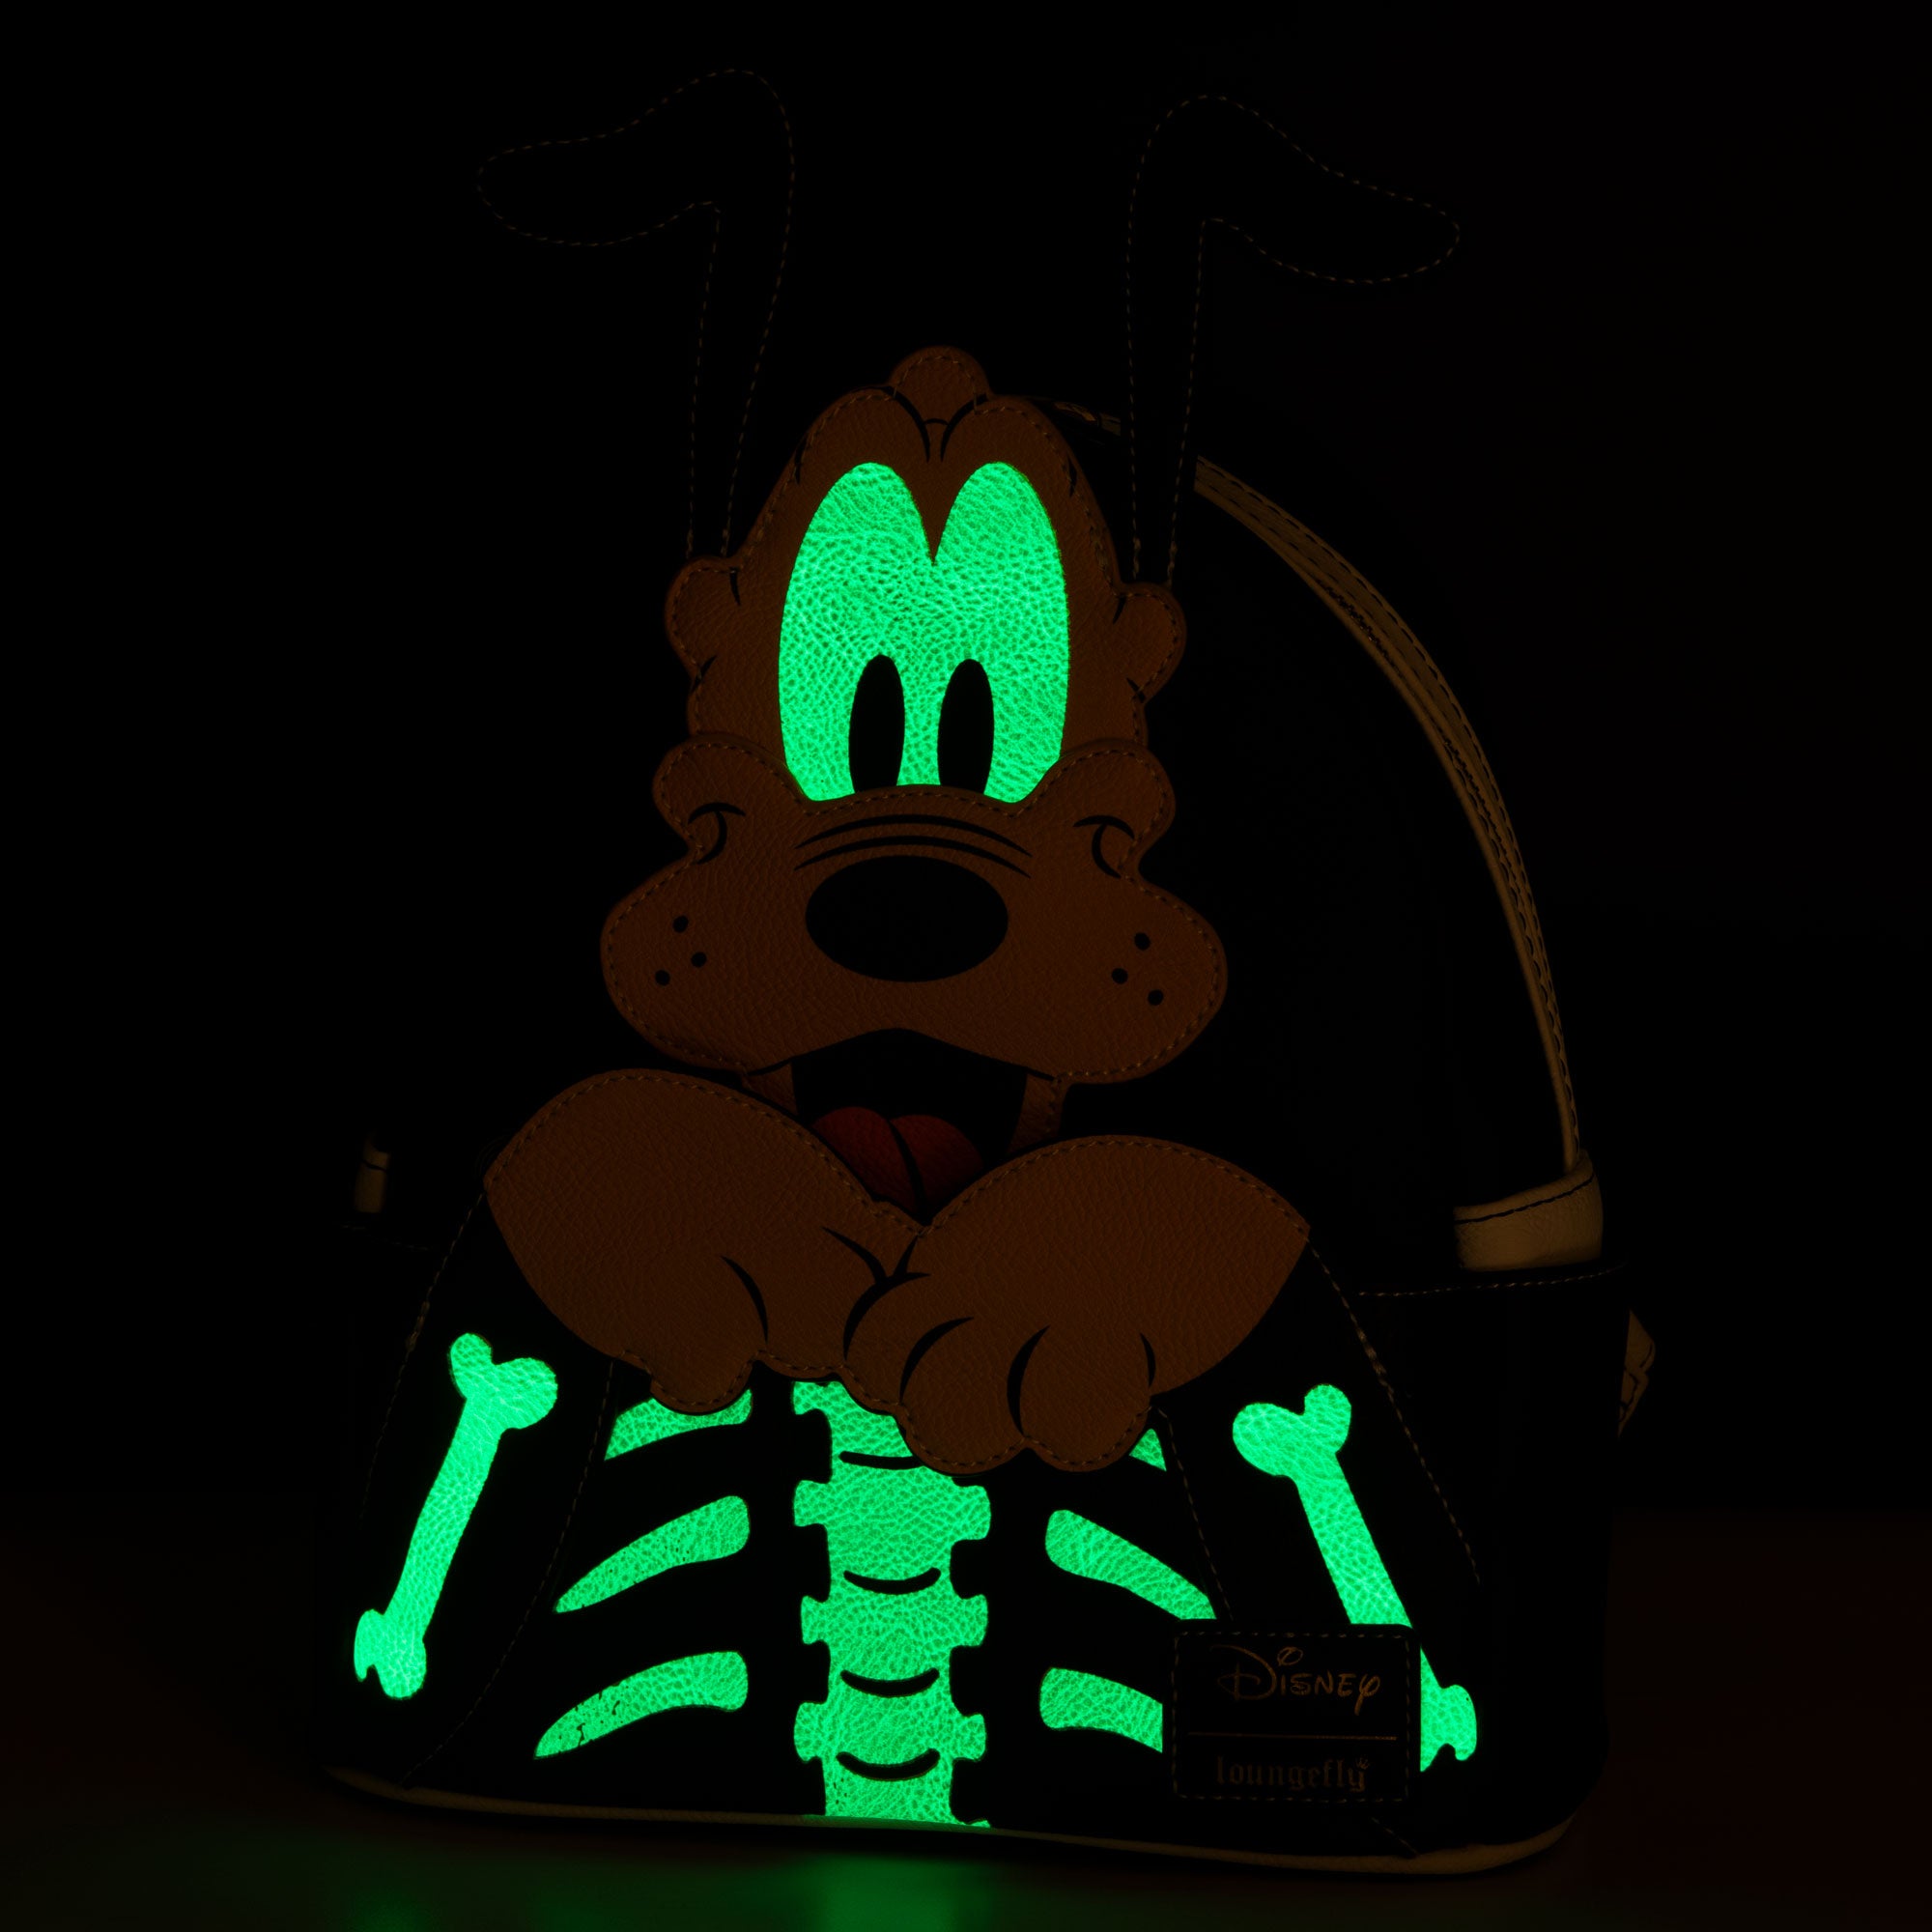 Loungefly x Disney Pluto Skeleton Cosplay Mini Backpack